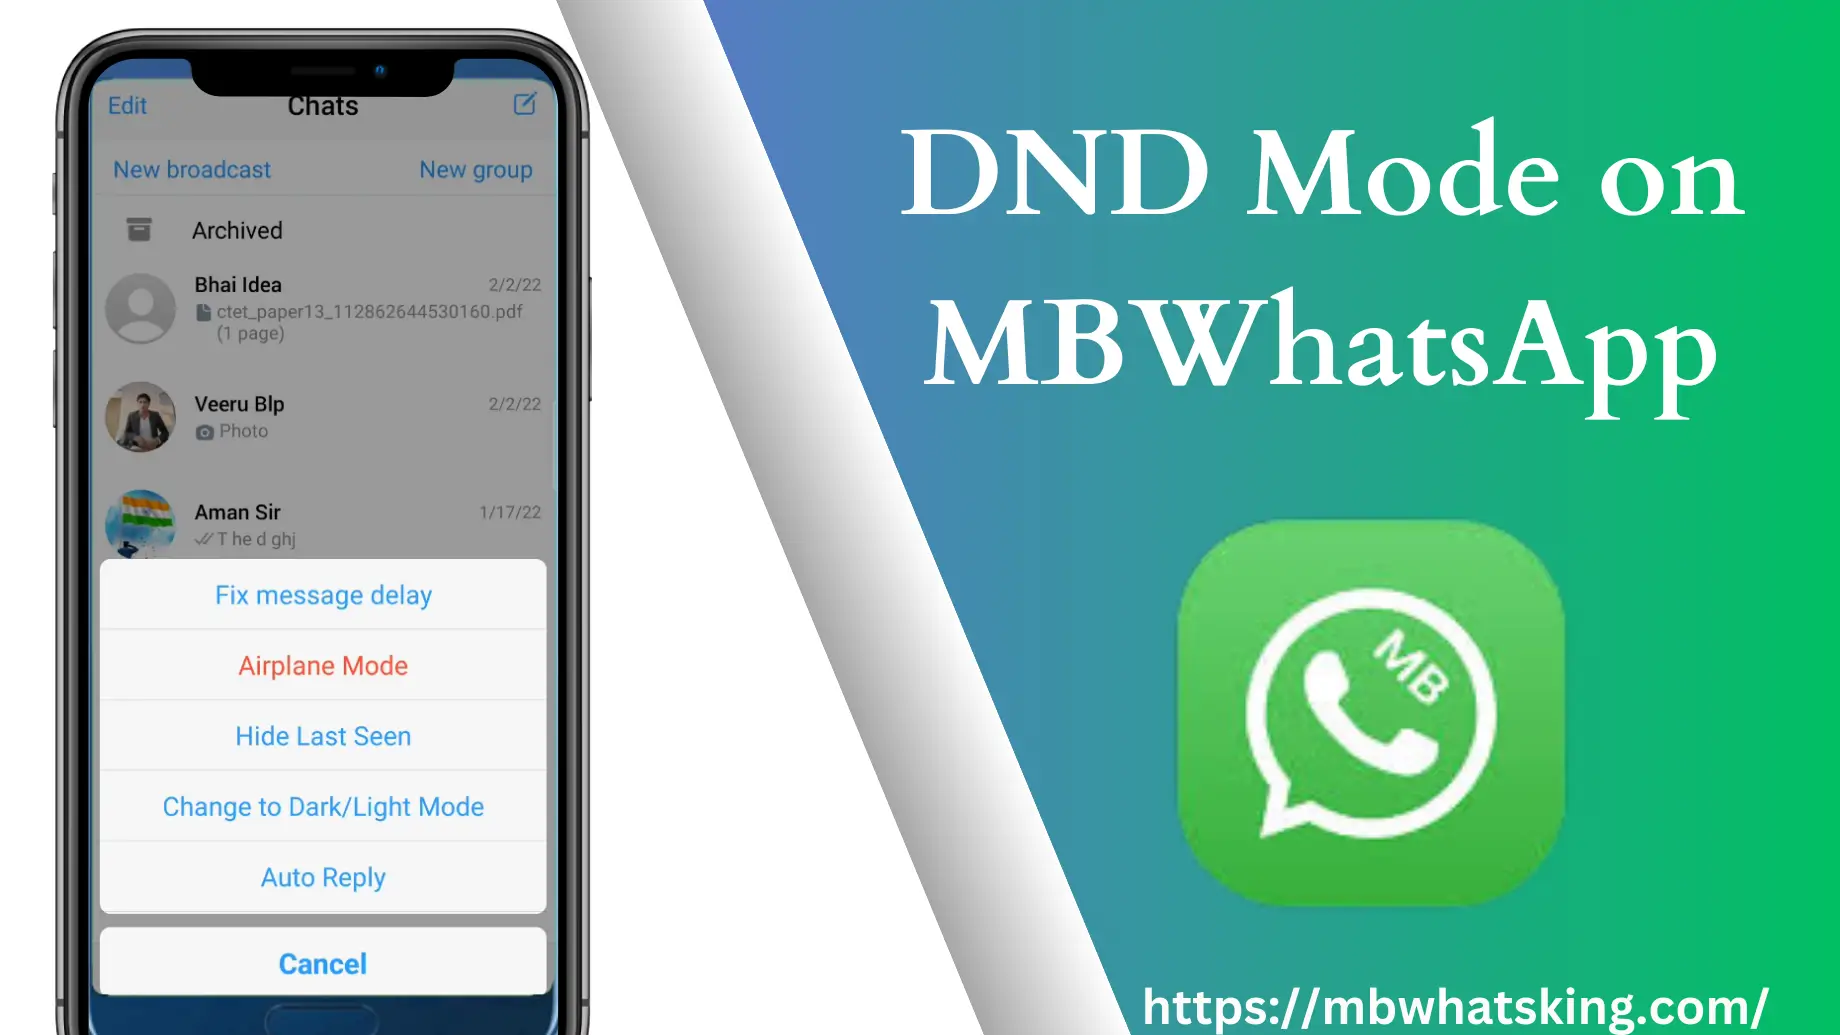 DND mode on MBWhatsApp